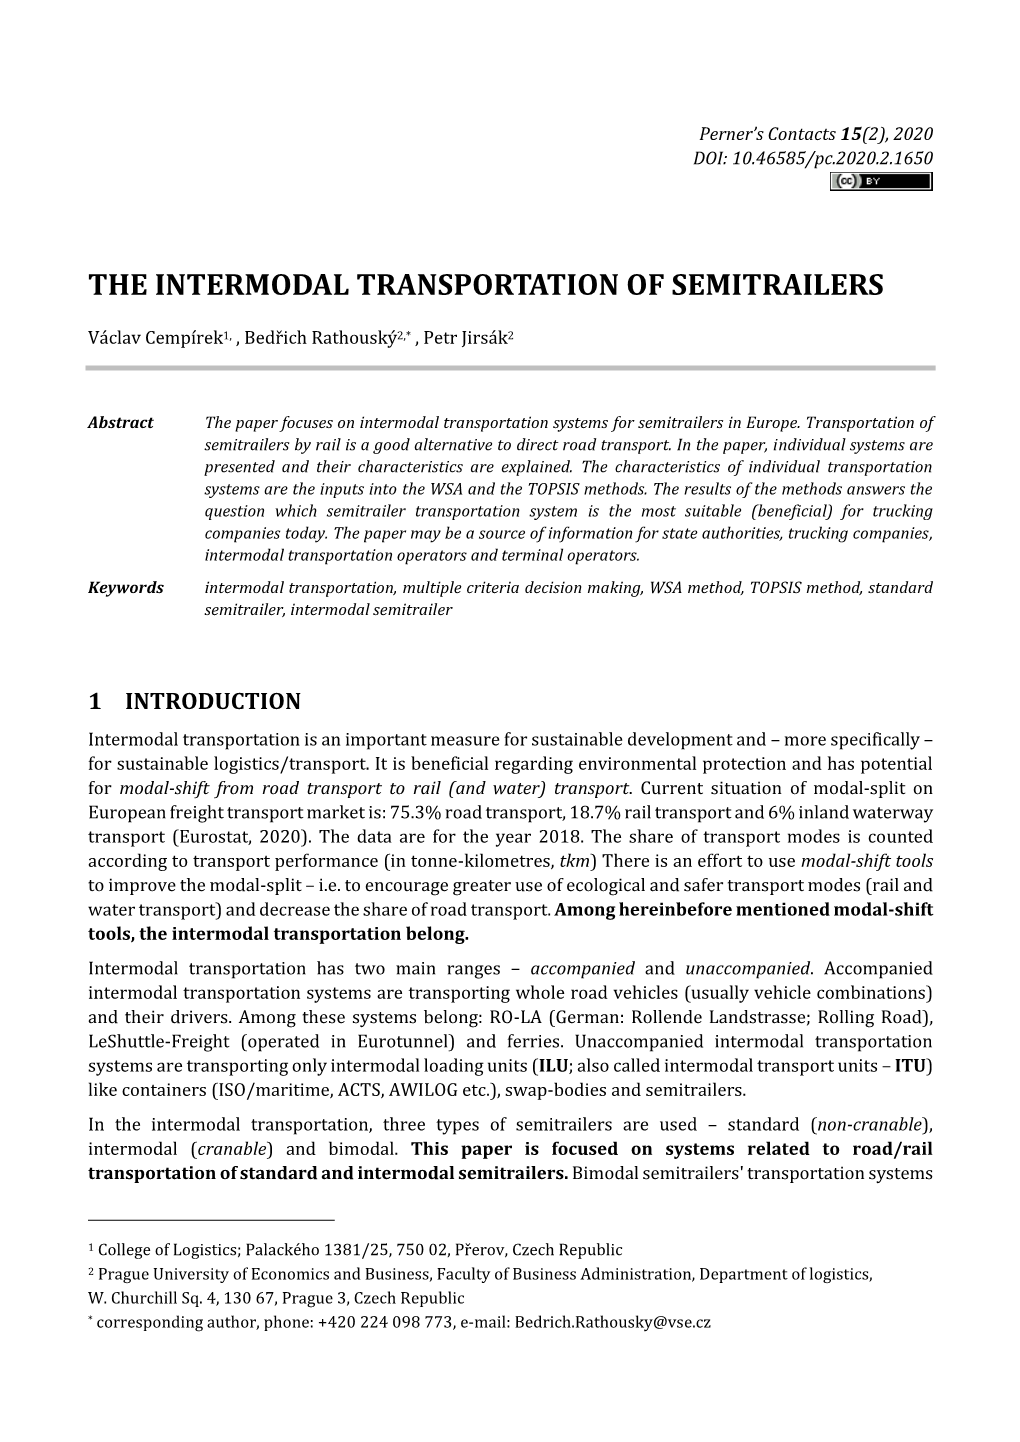 The Intermodal Transportation of Semitrailers